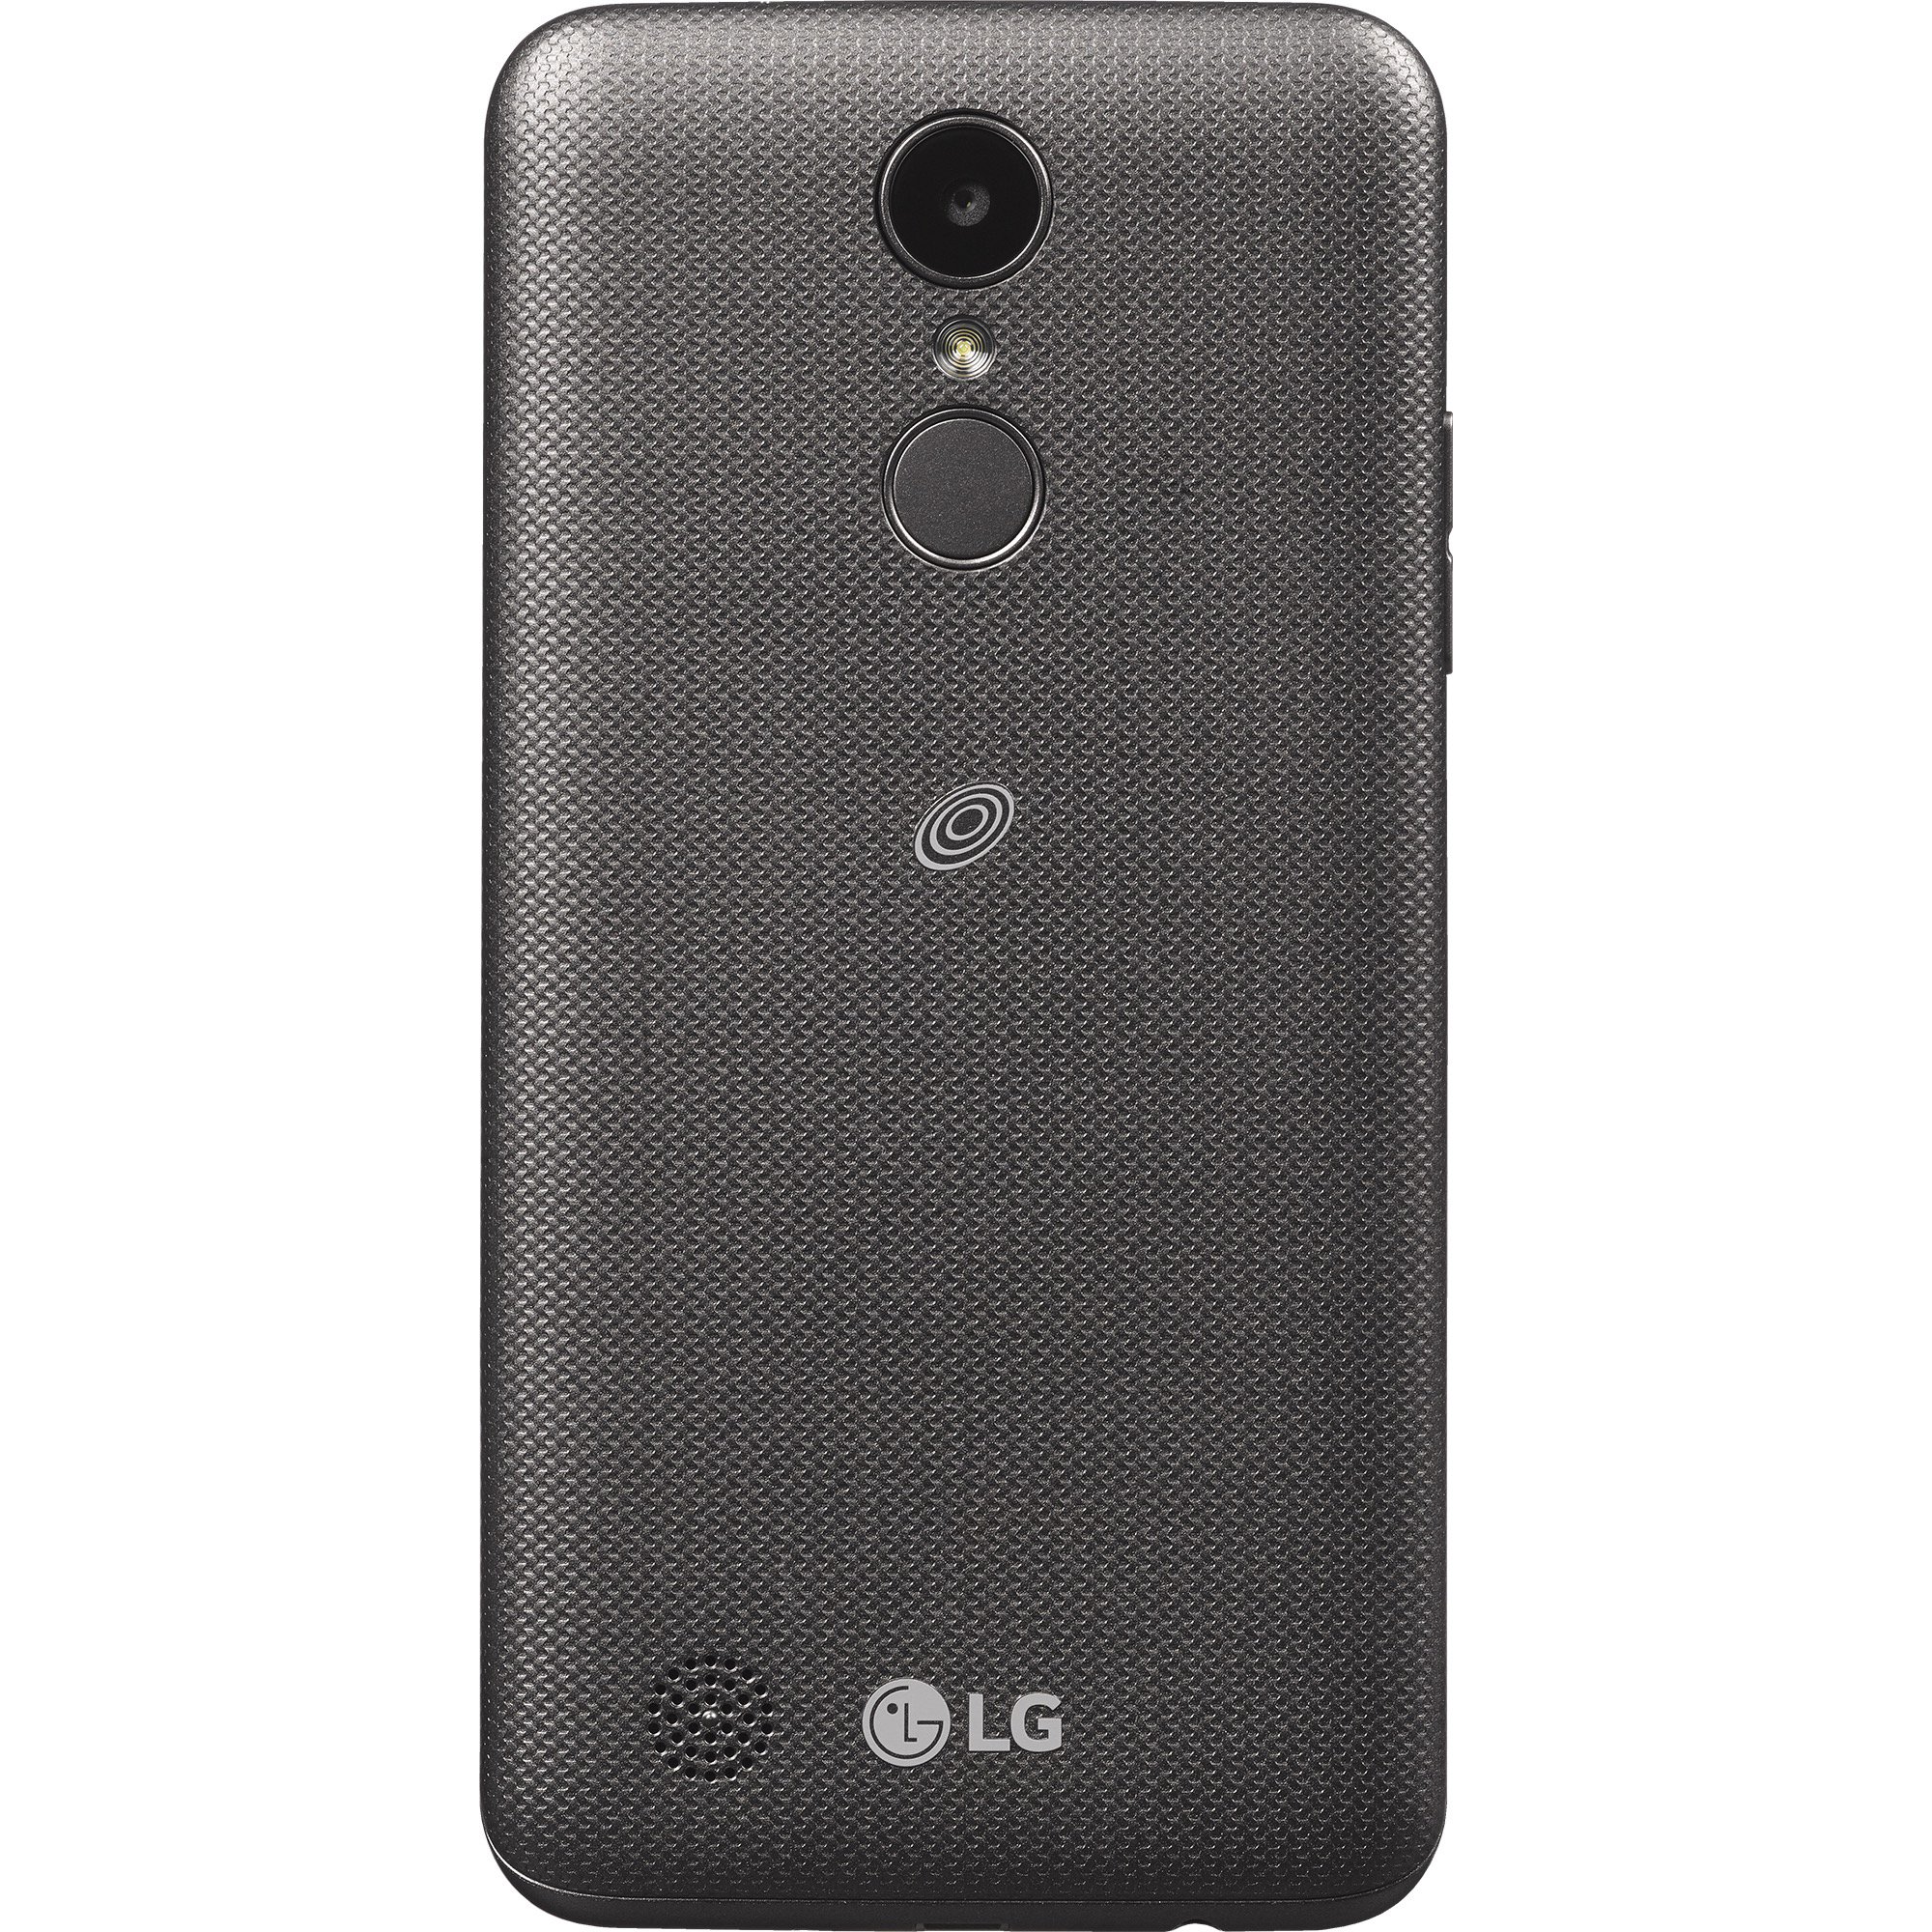 TracFone LG Rebel 2 4G LTE Prepaid Smartphone